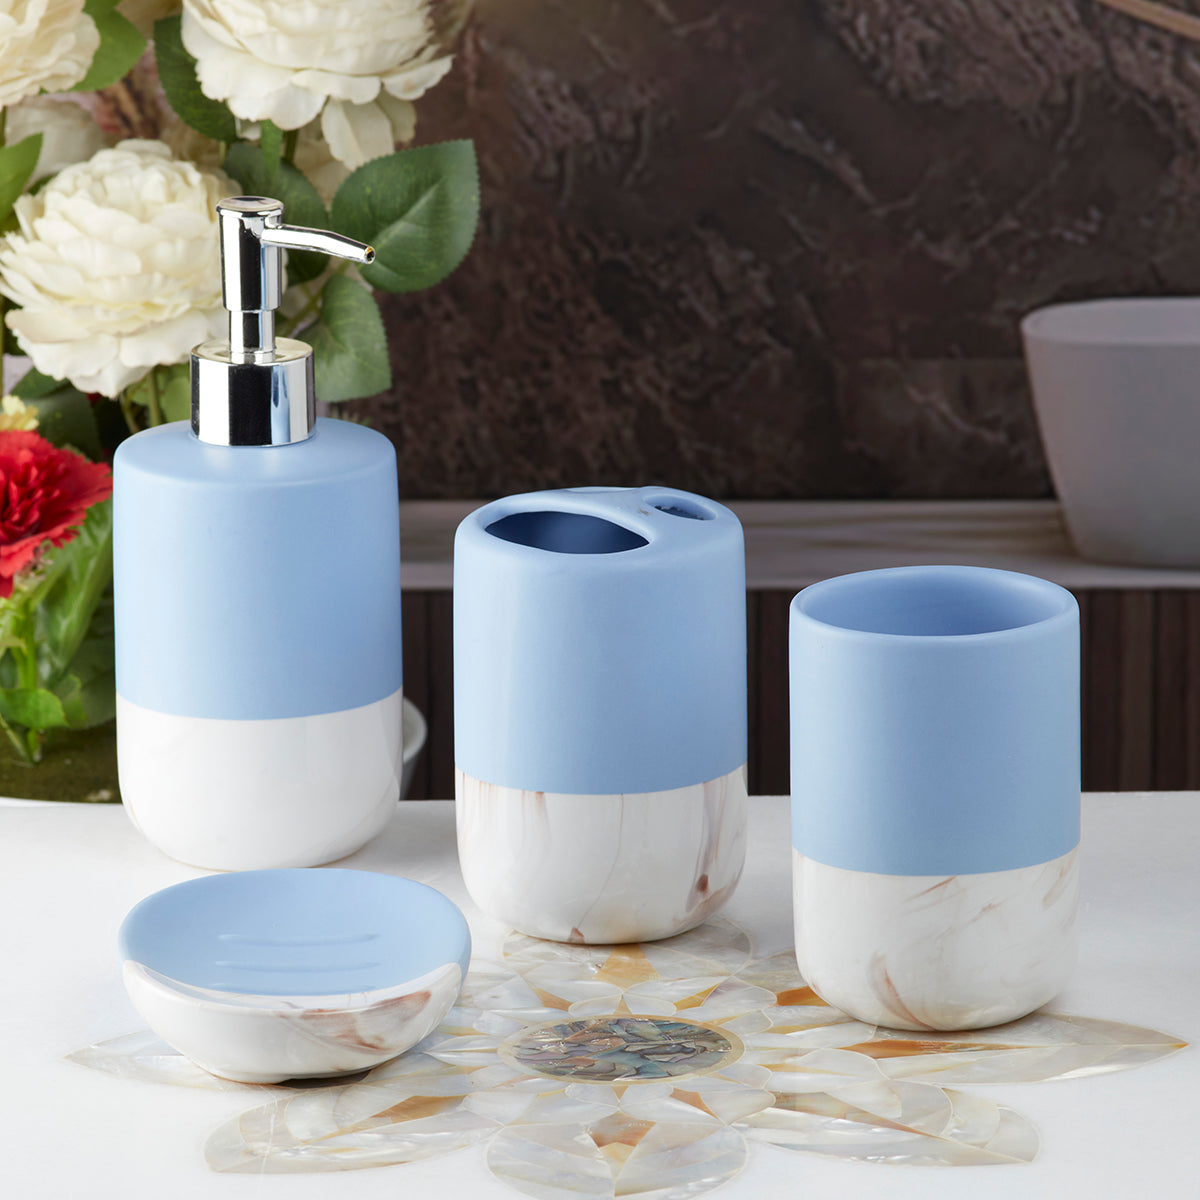 Ceramic Bathroom Accessories Set of 4 Bath Set with Soap Dispenser (9621)